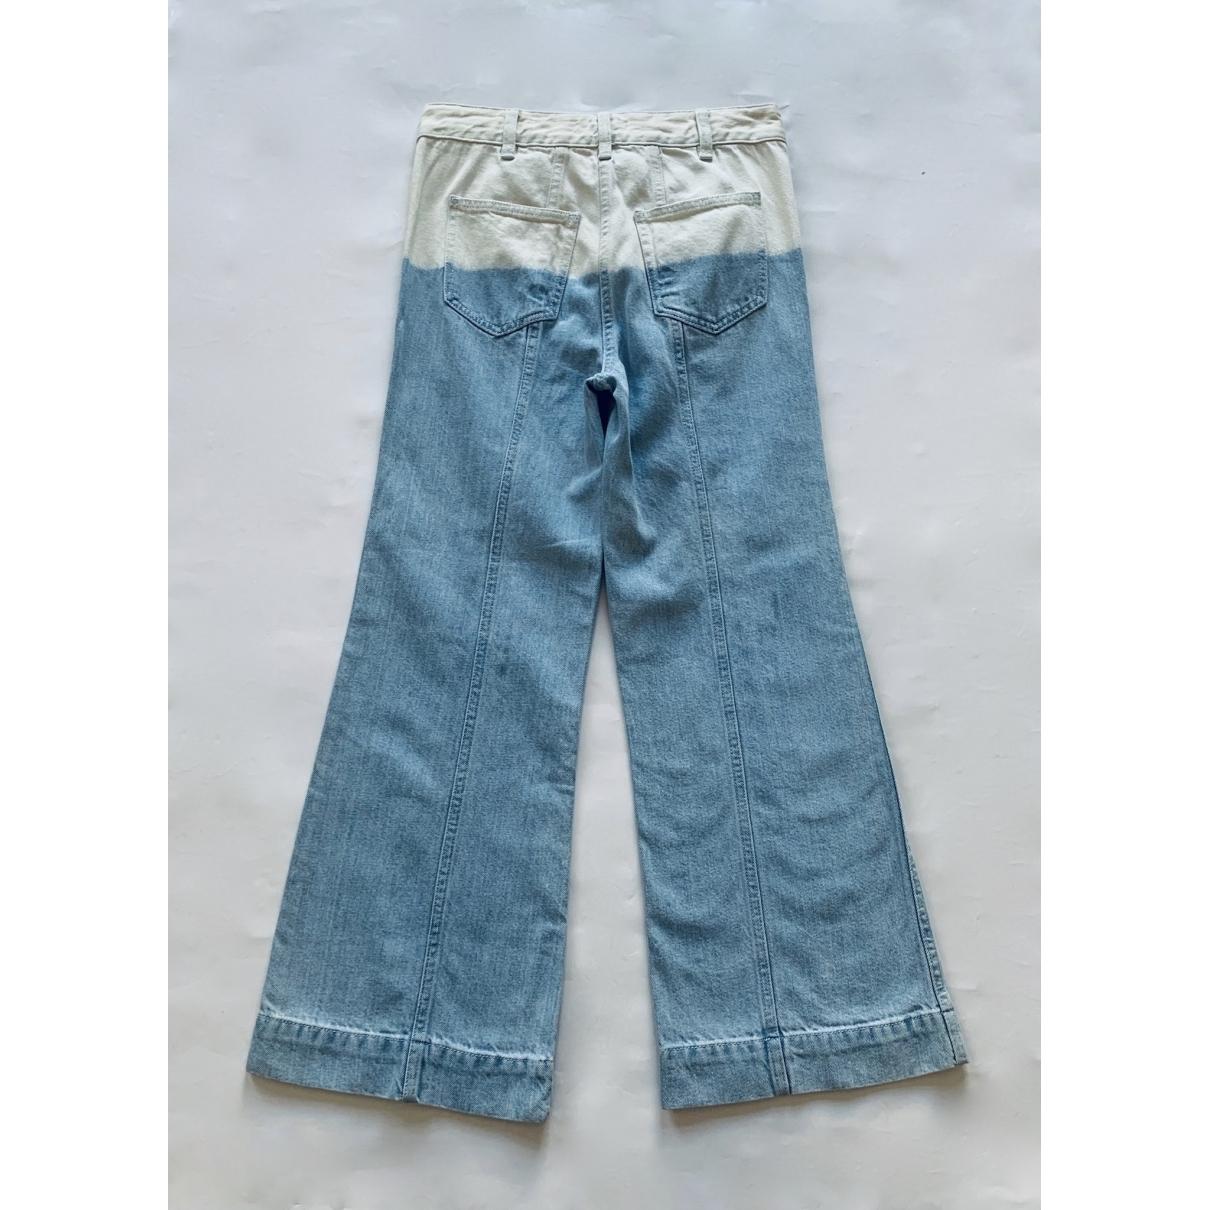 Ulla Johnson Large jeans for sale